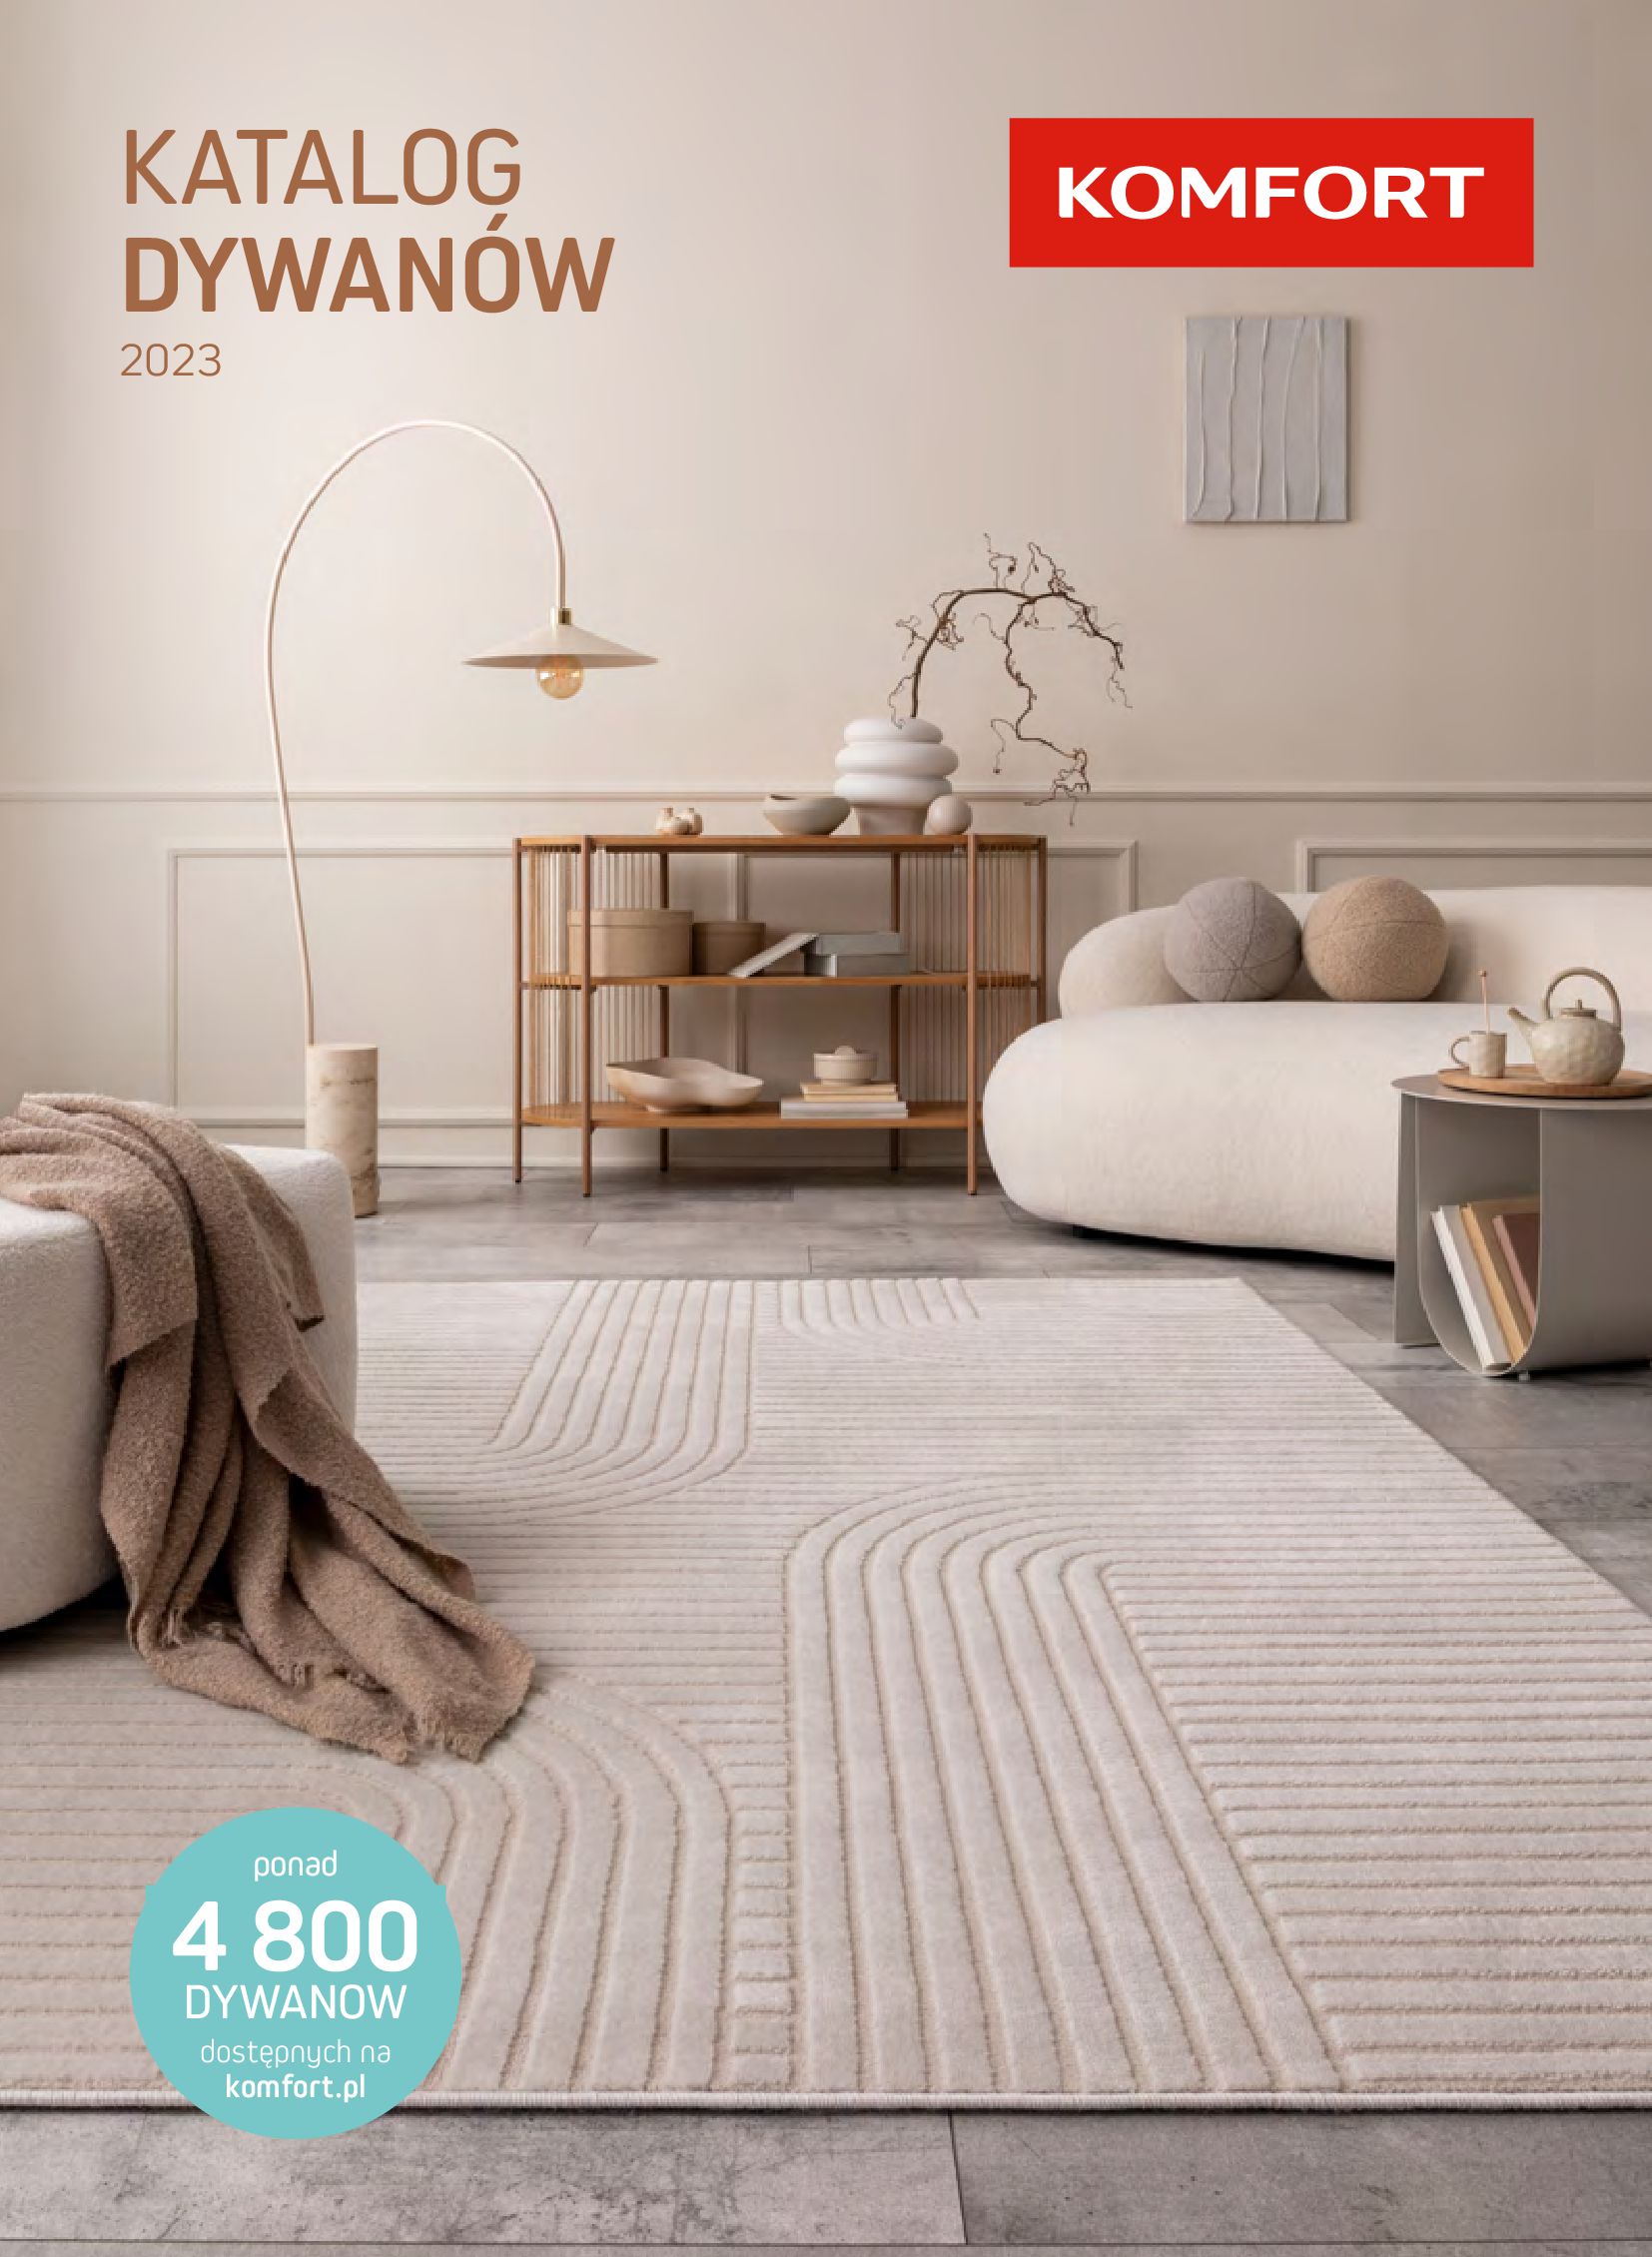 Komfort:  Gazetka Komfort - Katalog dywanów 2023 28.02.2023